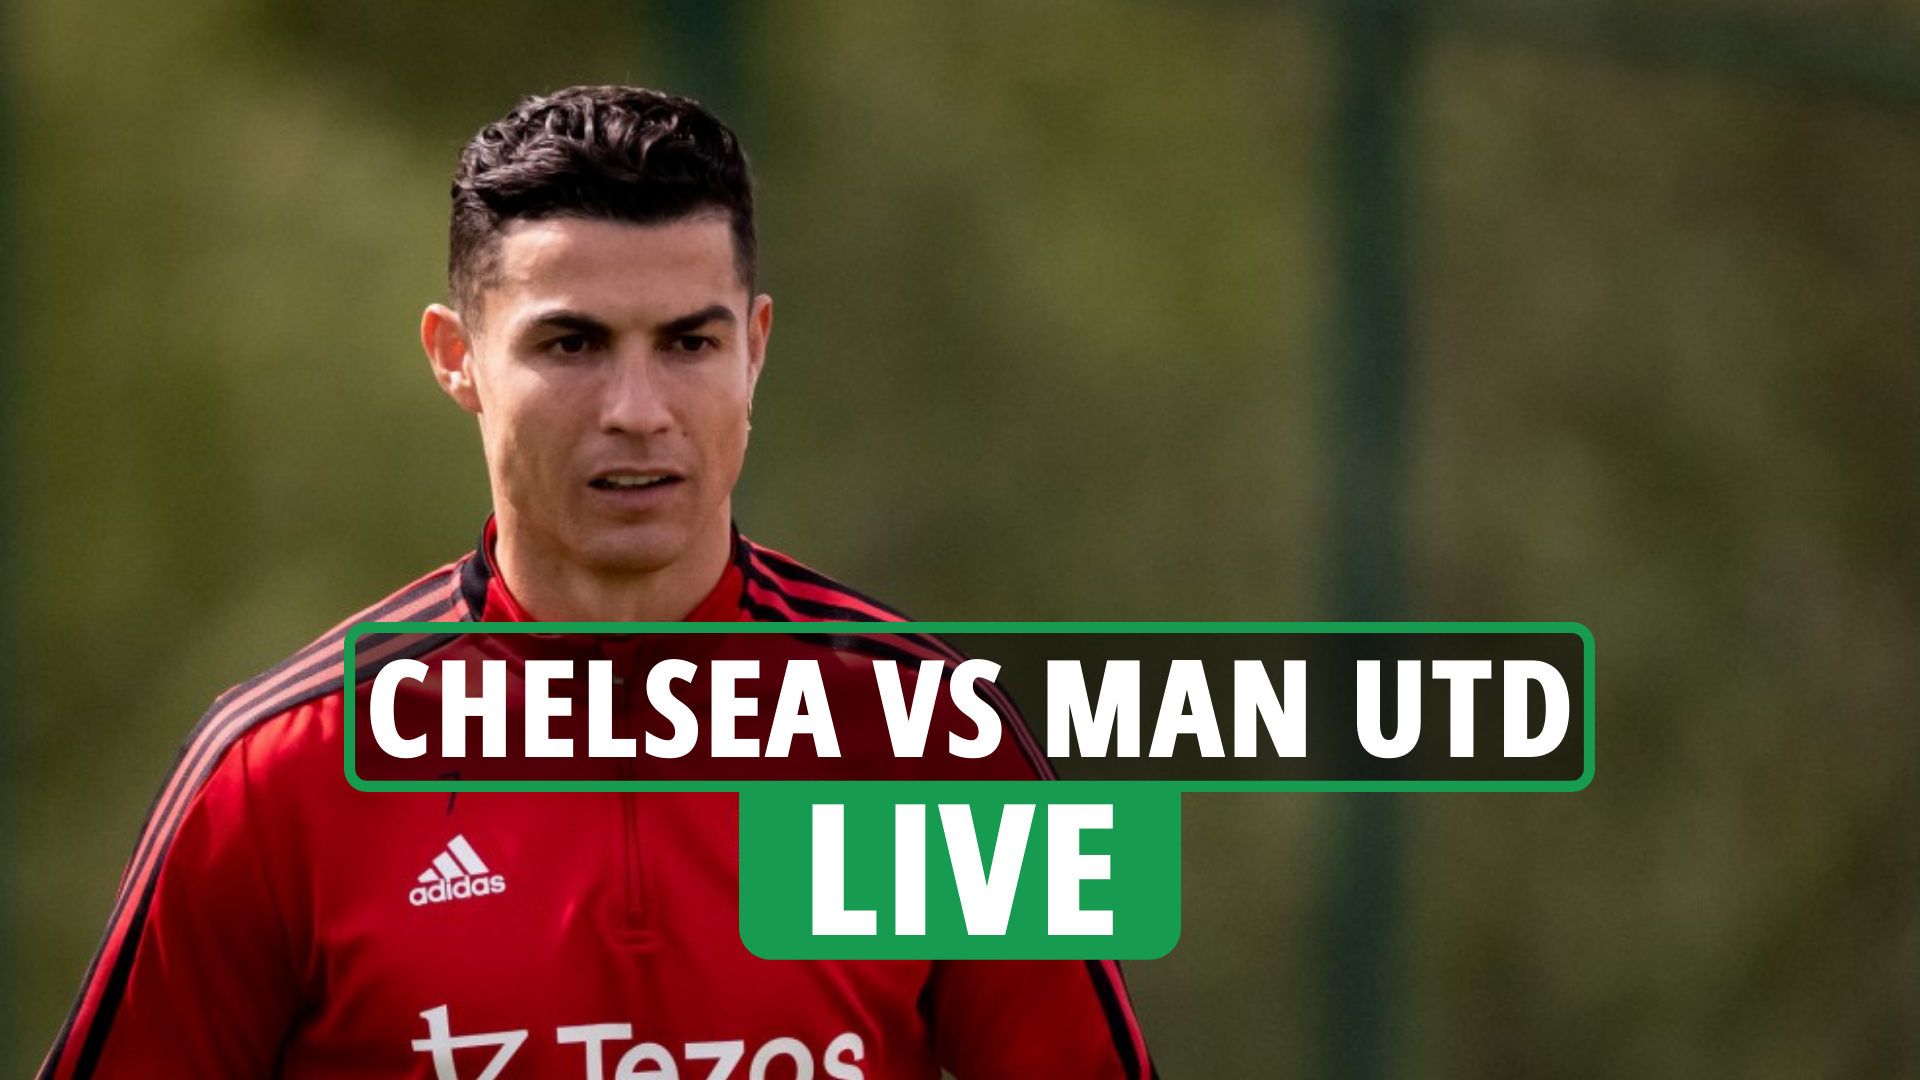 Man Utd vs Chelsea LIVE: Latest updates from Premier League clash